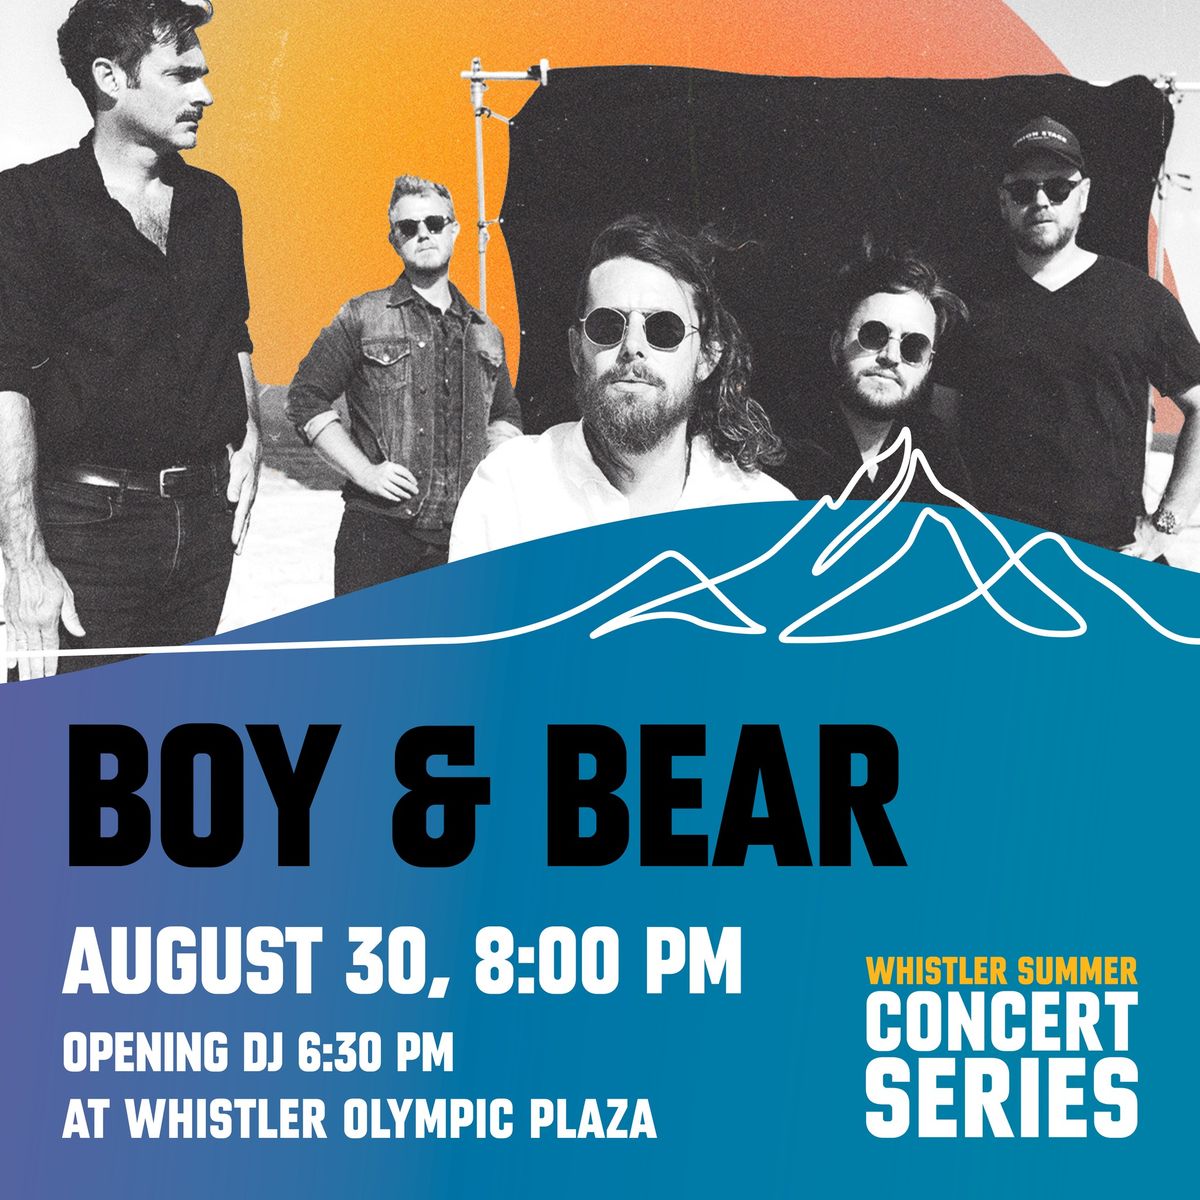 Boy & Bear - Whistler Summer Concert Series, Whistler BC